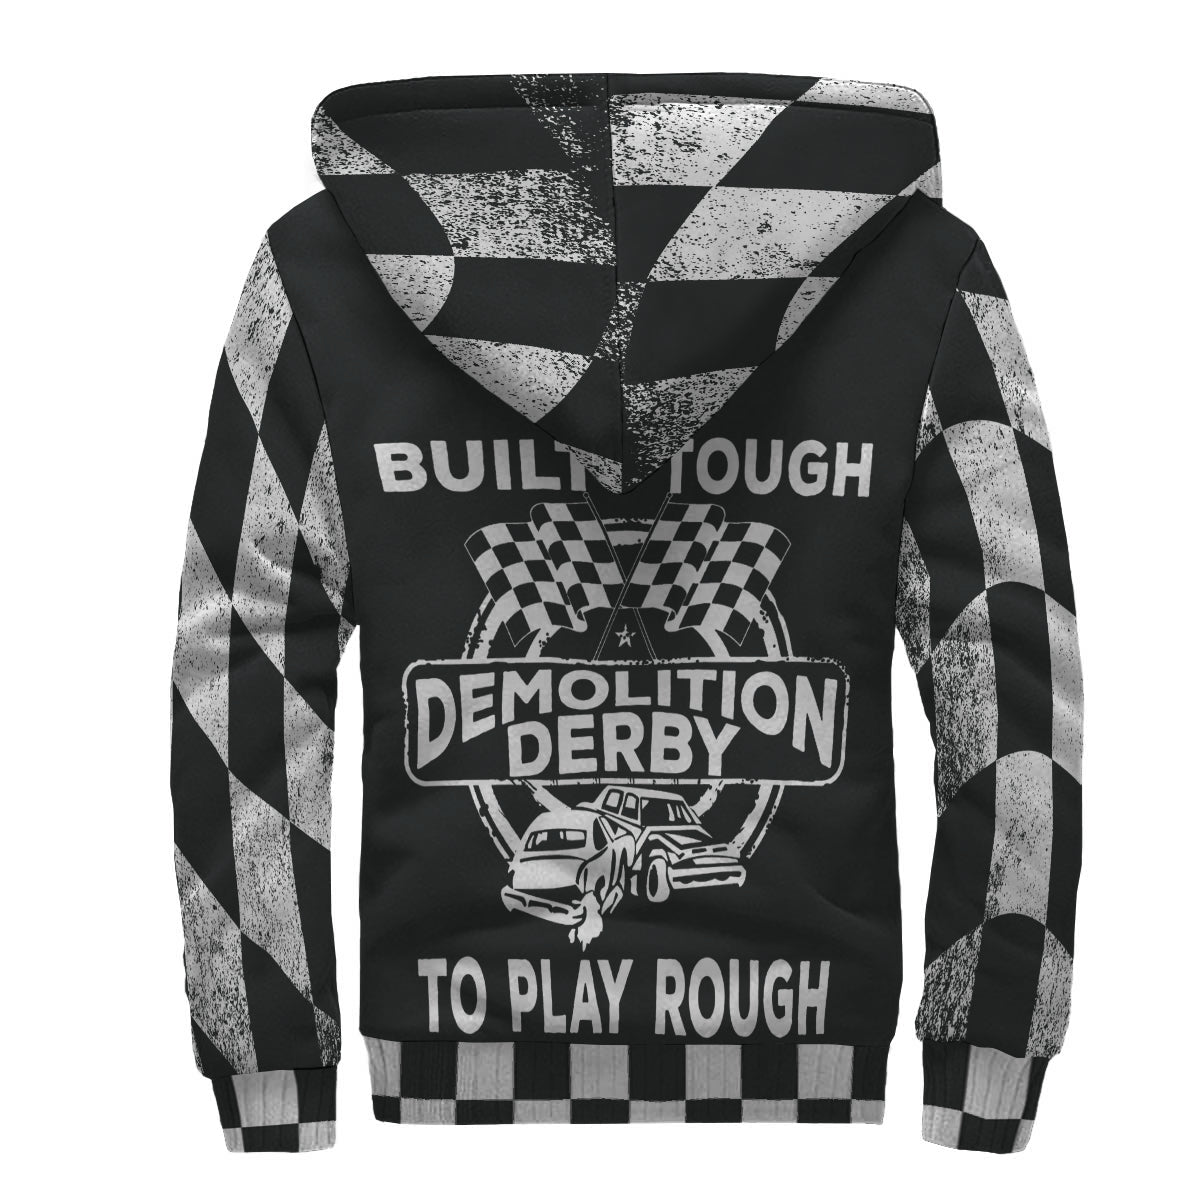 Demolition Derby Sherpa Jacket